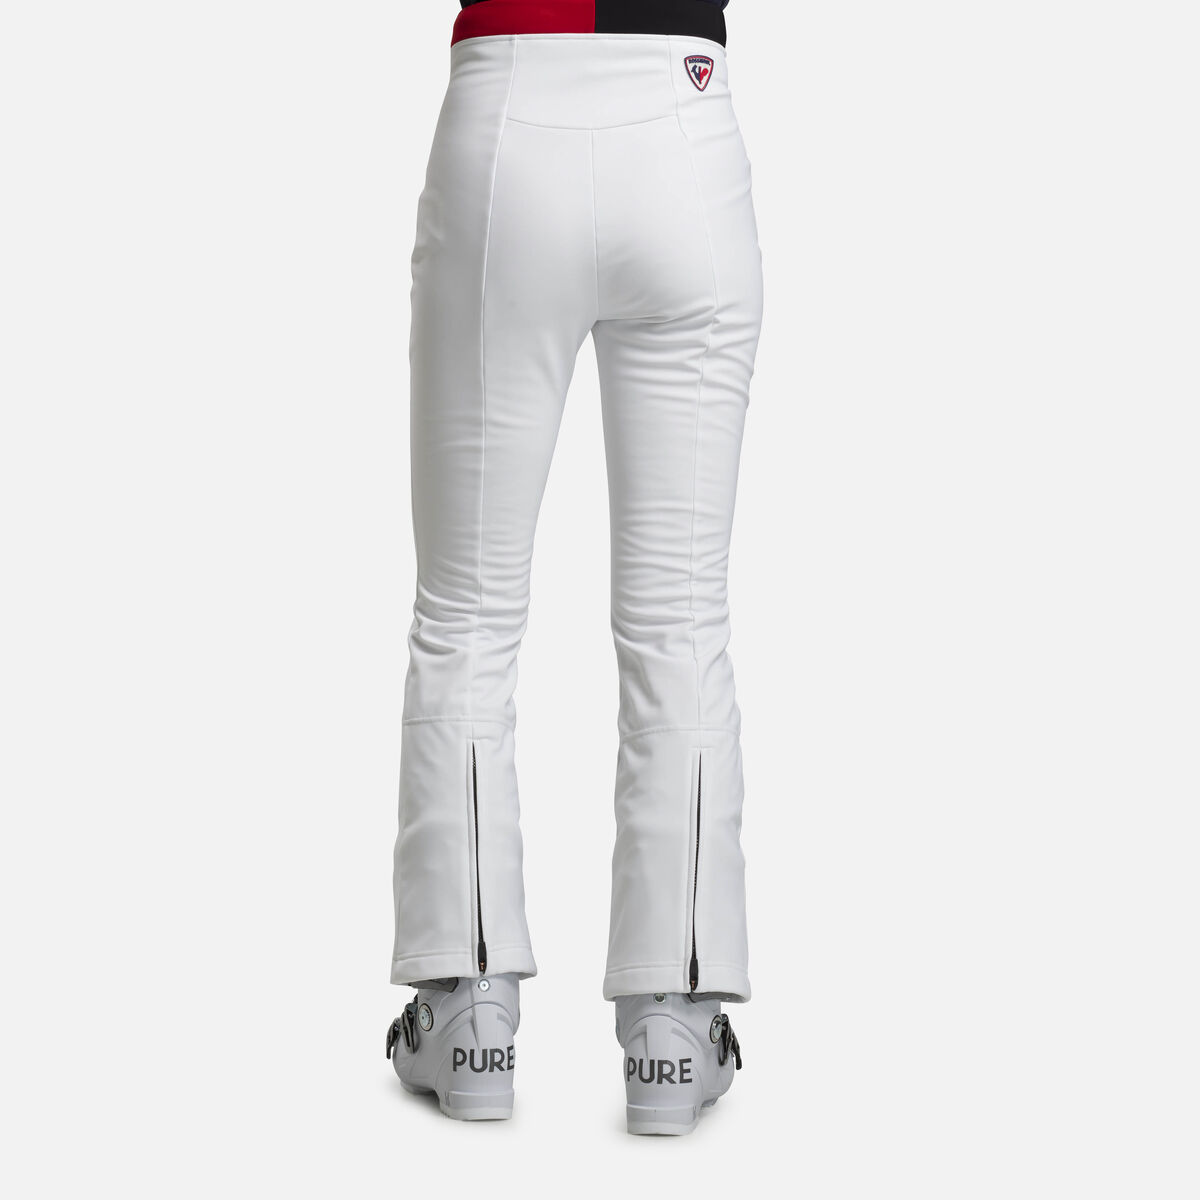 Julien Macdonald - Women's Regimented Ski Trousers White